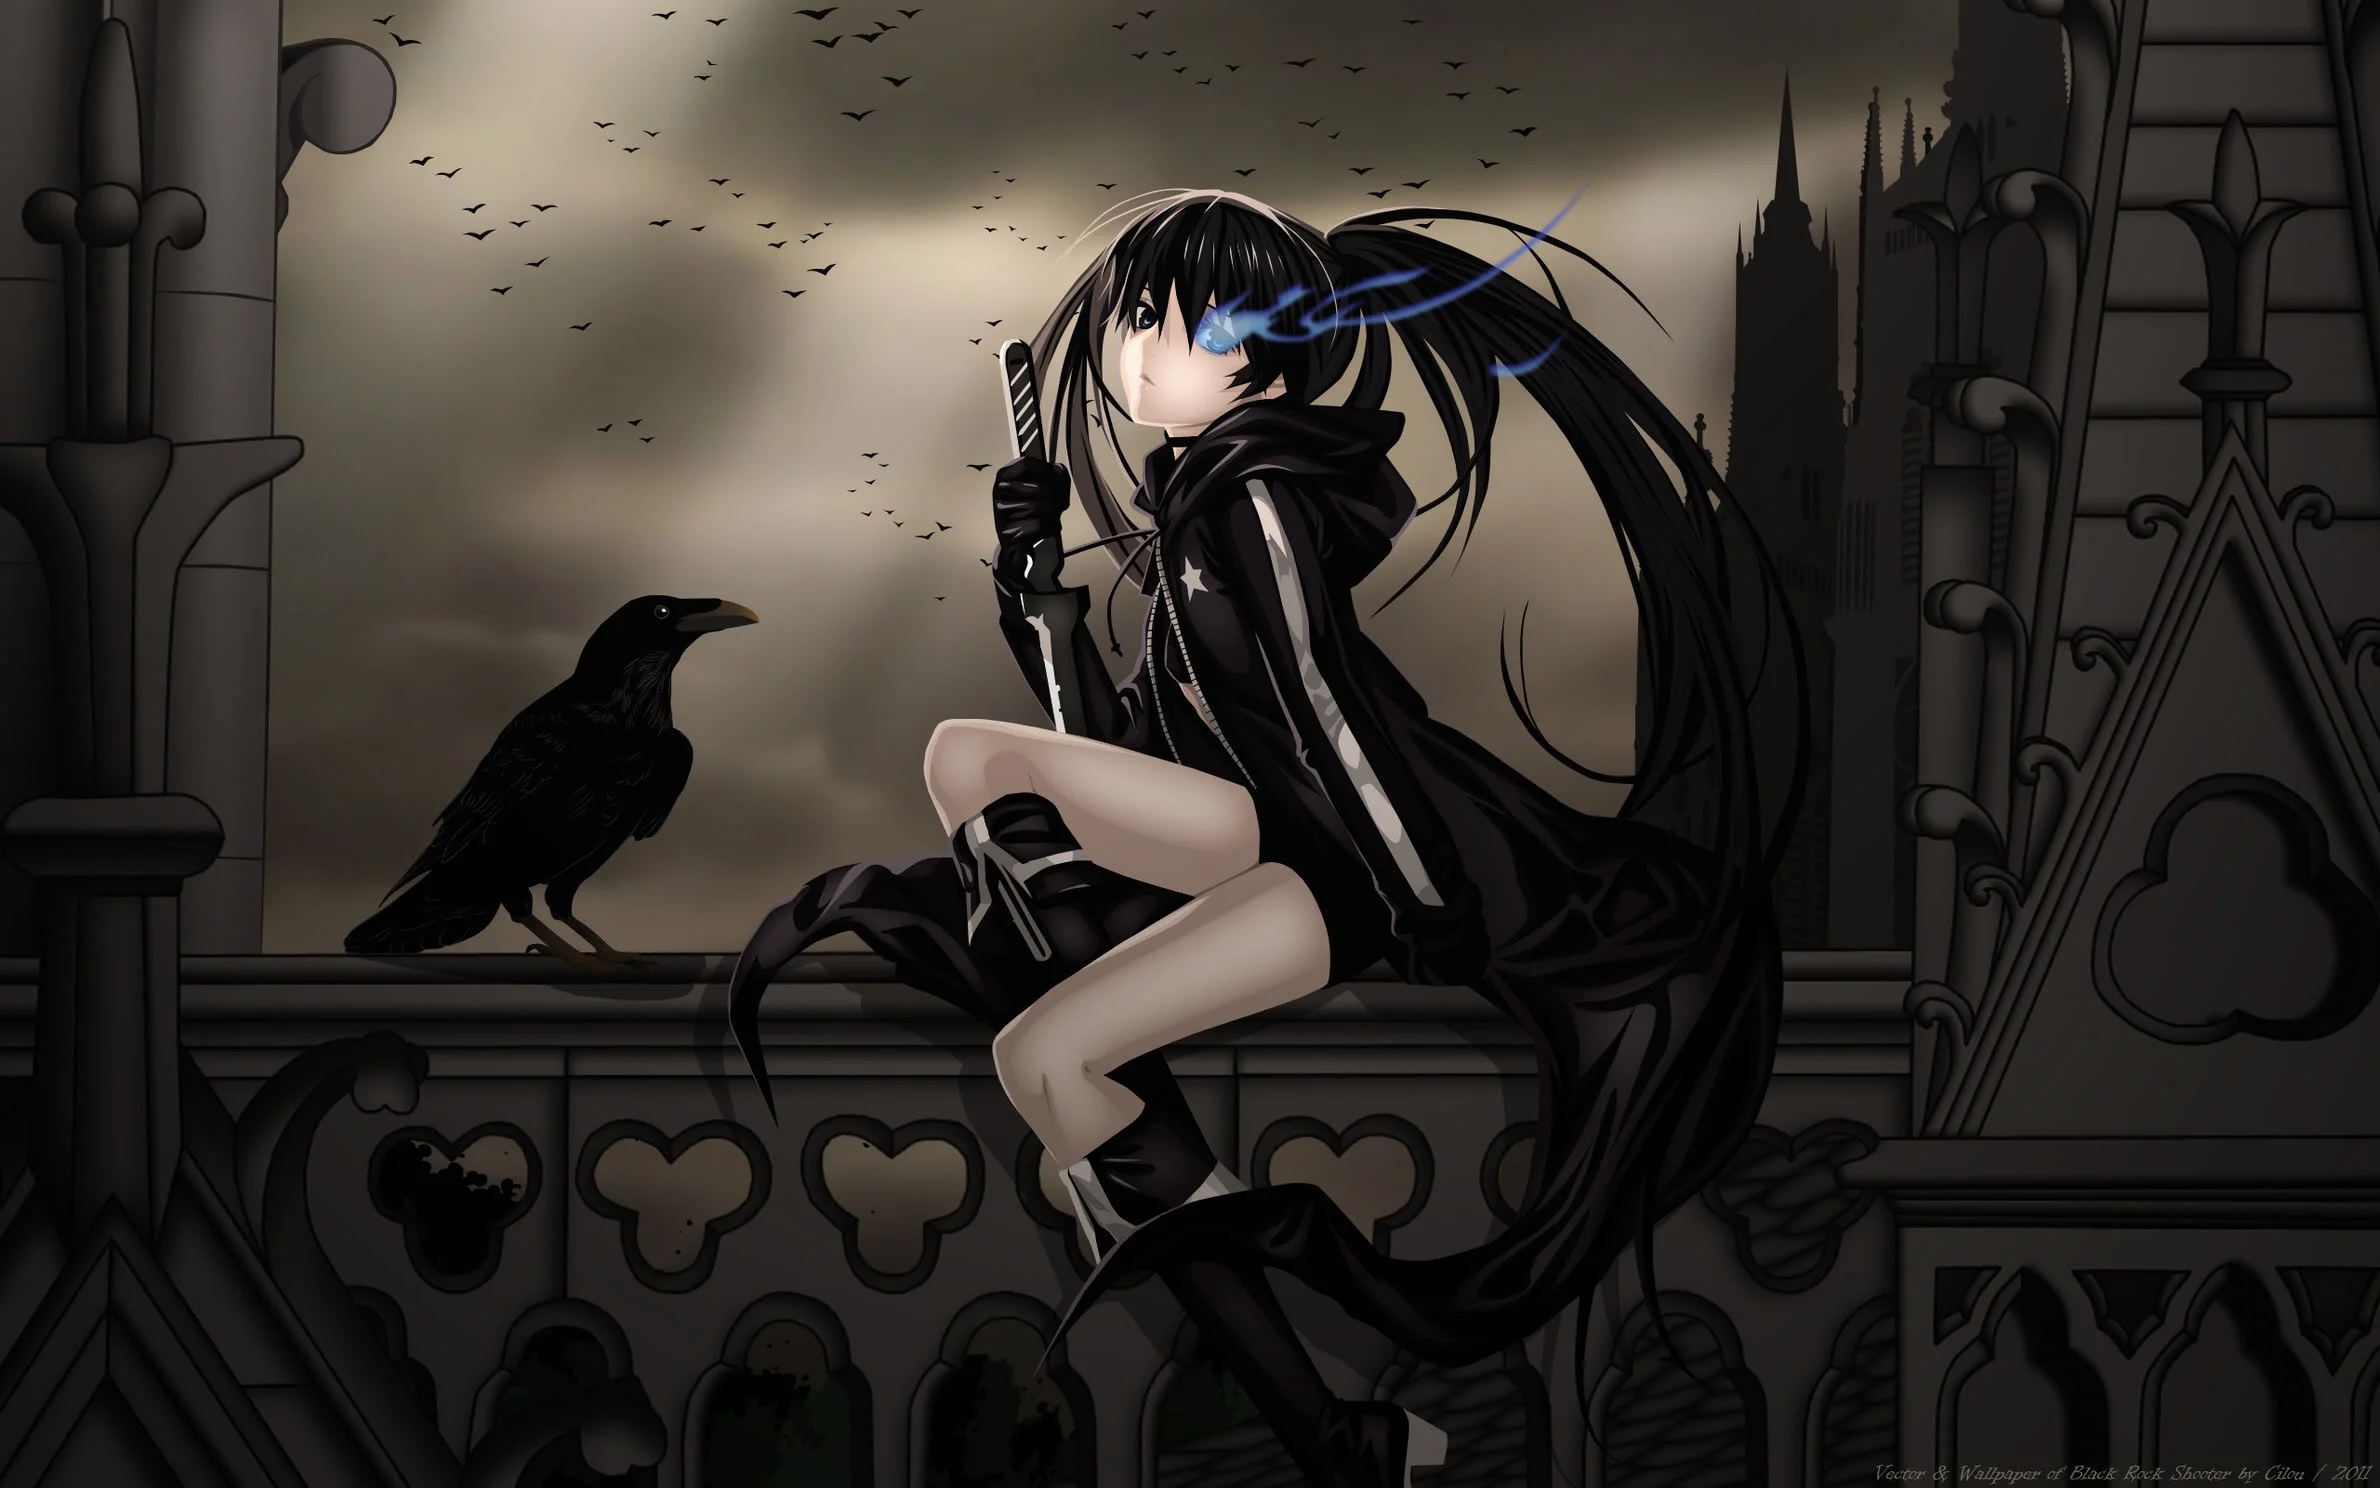 ArtStation  Gothic Anime Girl4KCharacter Reference Images